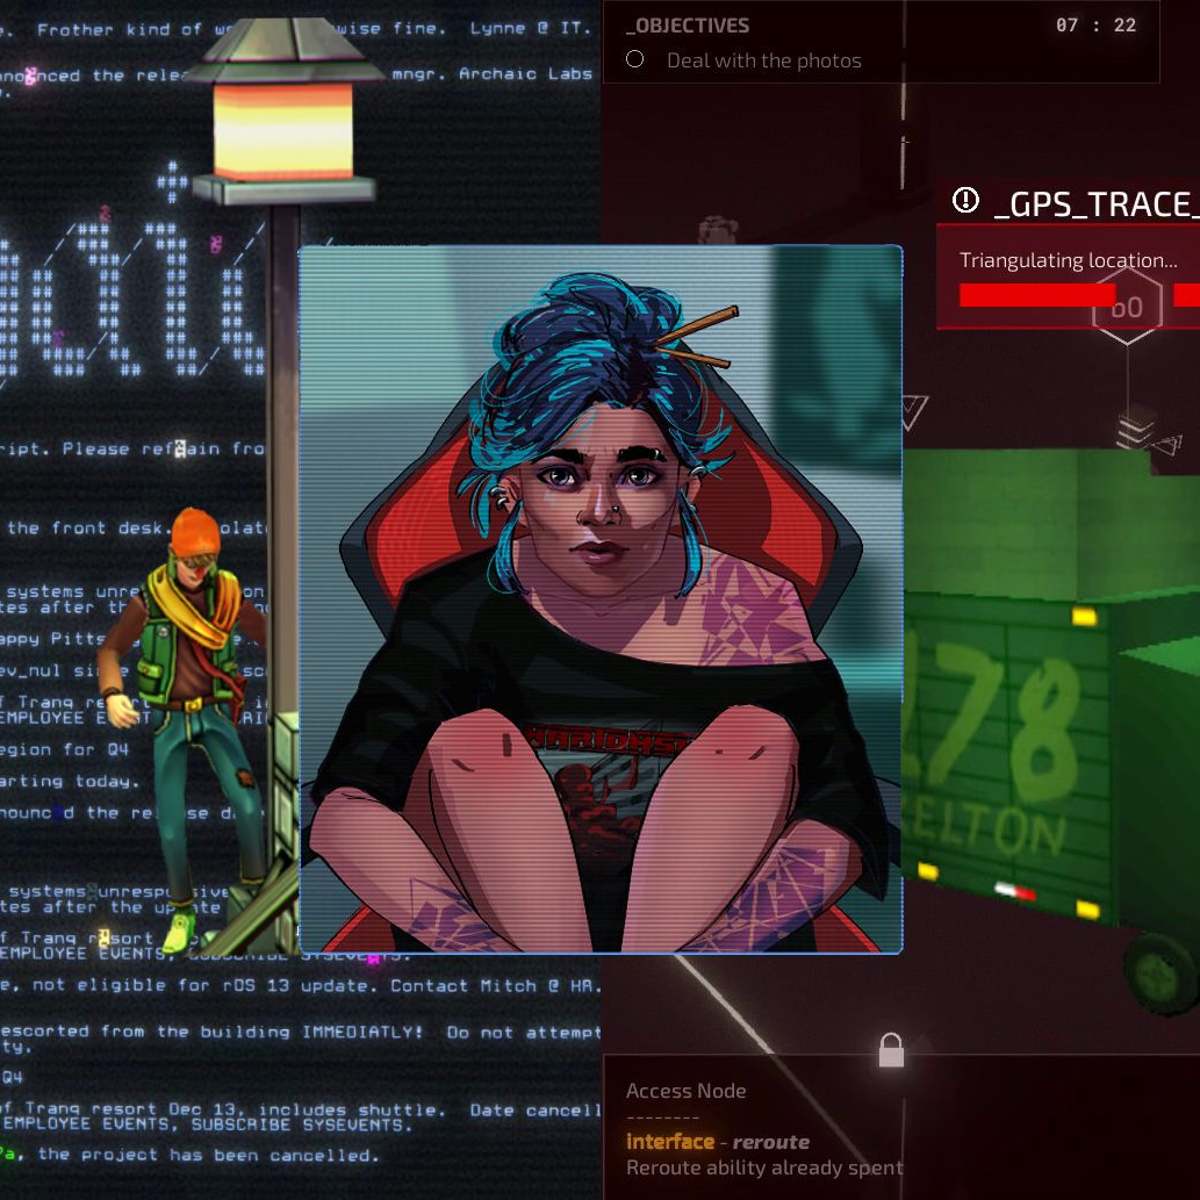 Real Hacker Plays hacking simulator! 